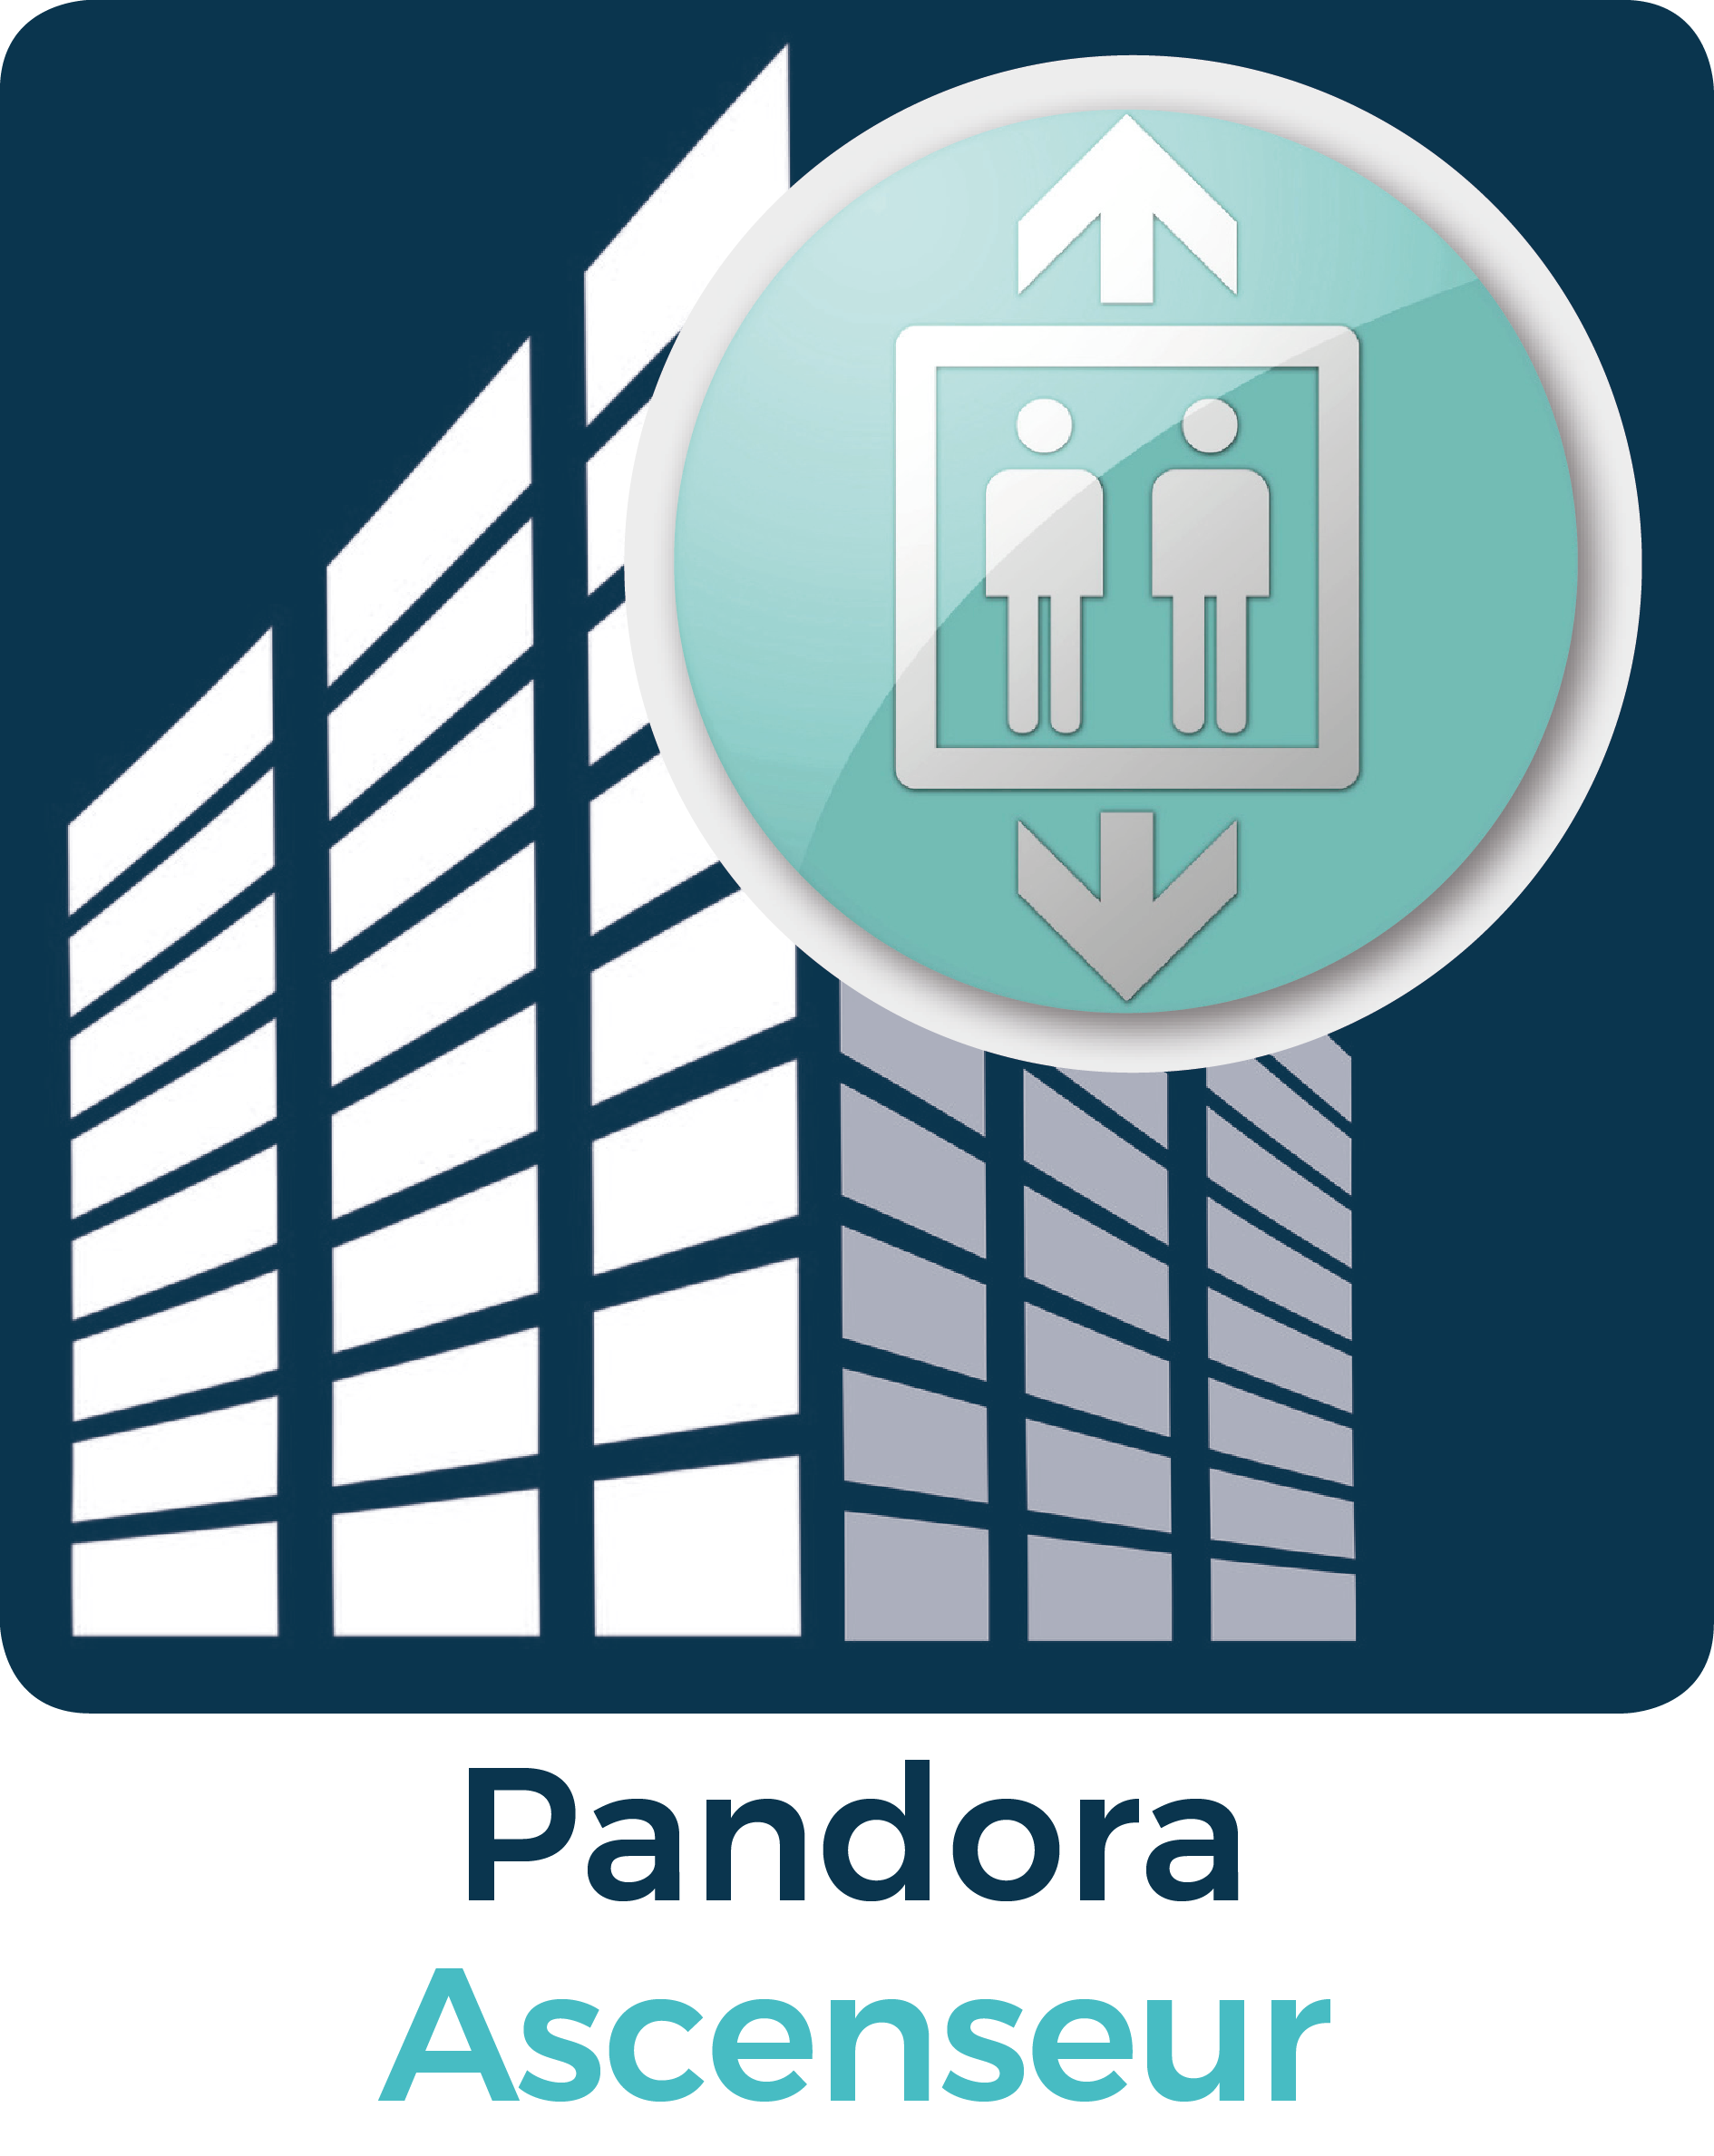 Pandora 81cc61e5d506-e52cf0de60a1-1547544906.png